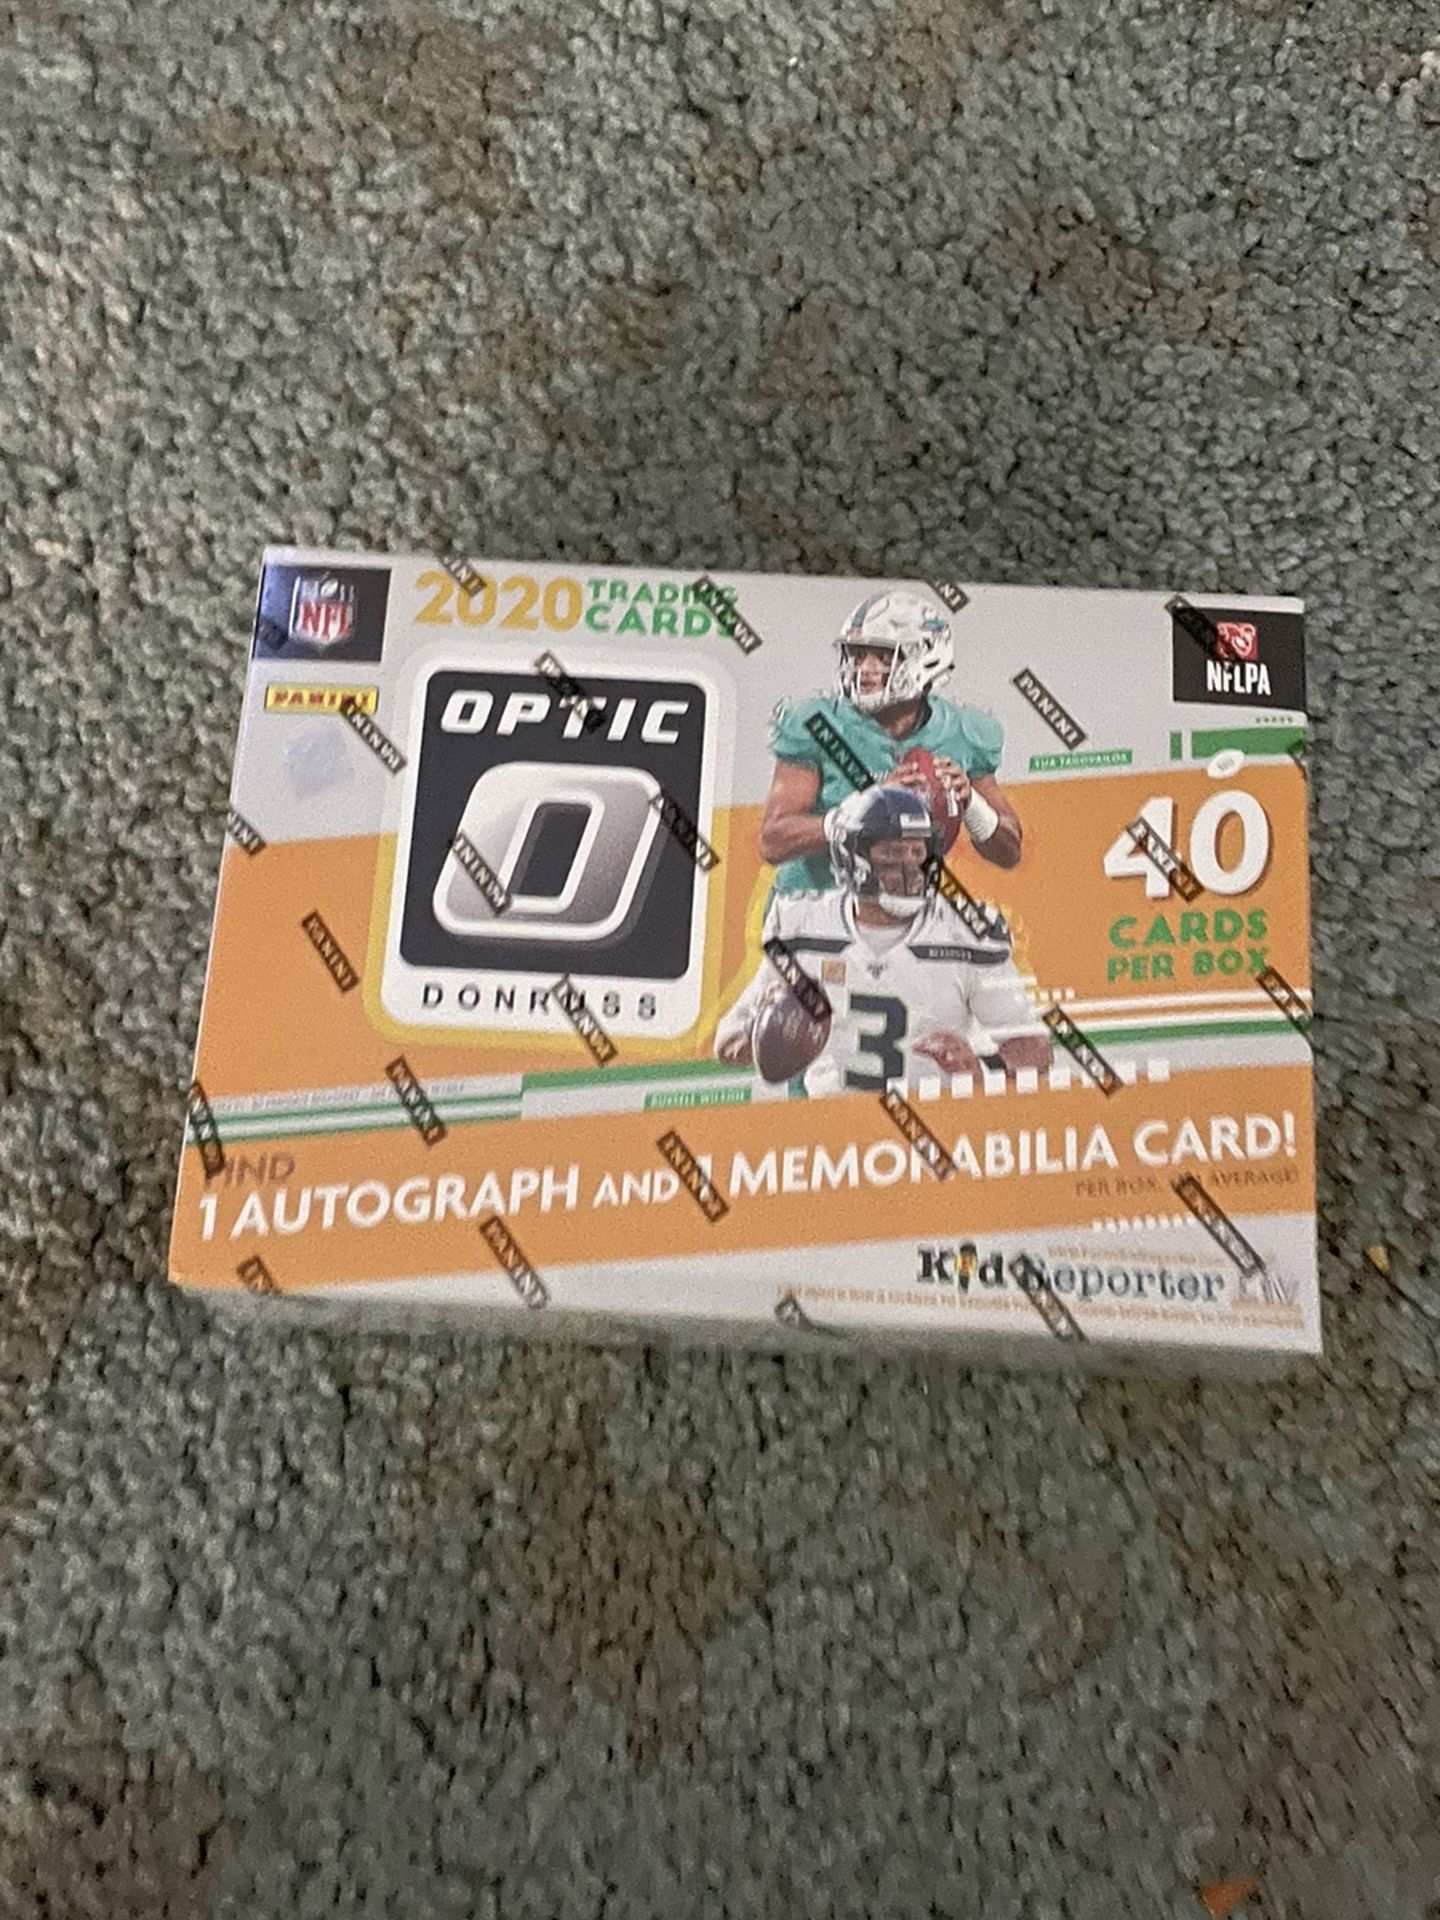 Optic football mega box with one autograph and mem card